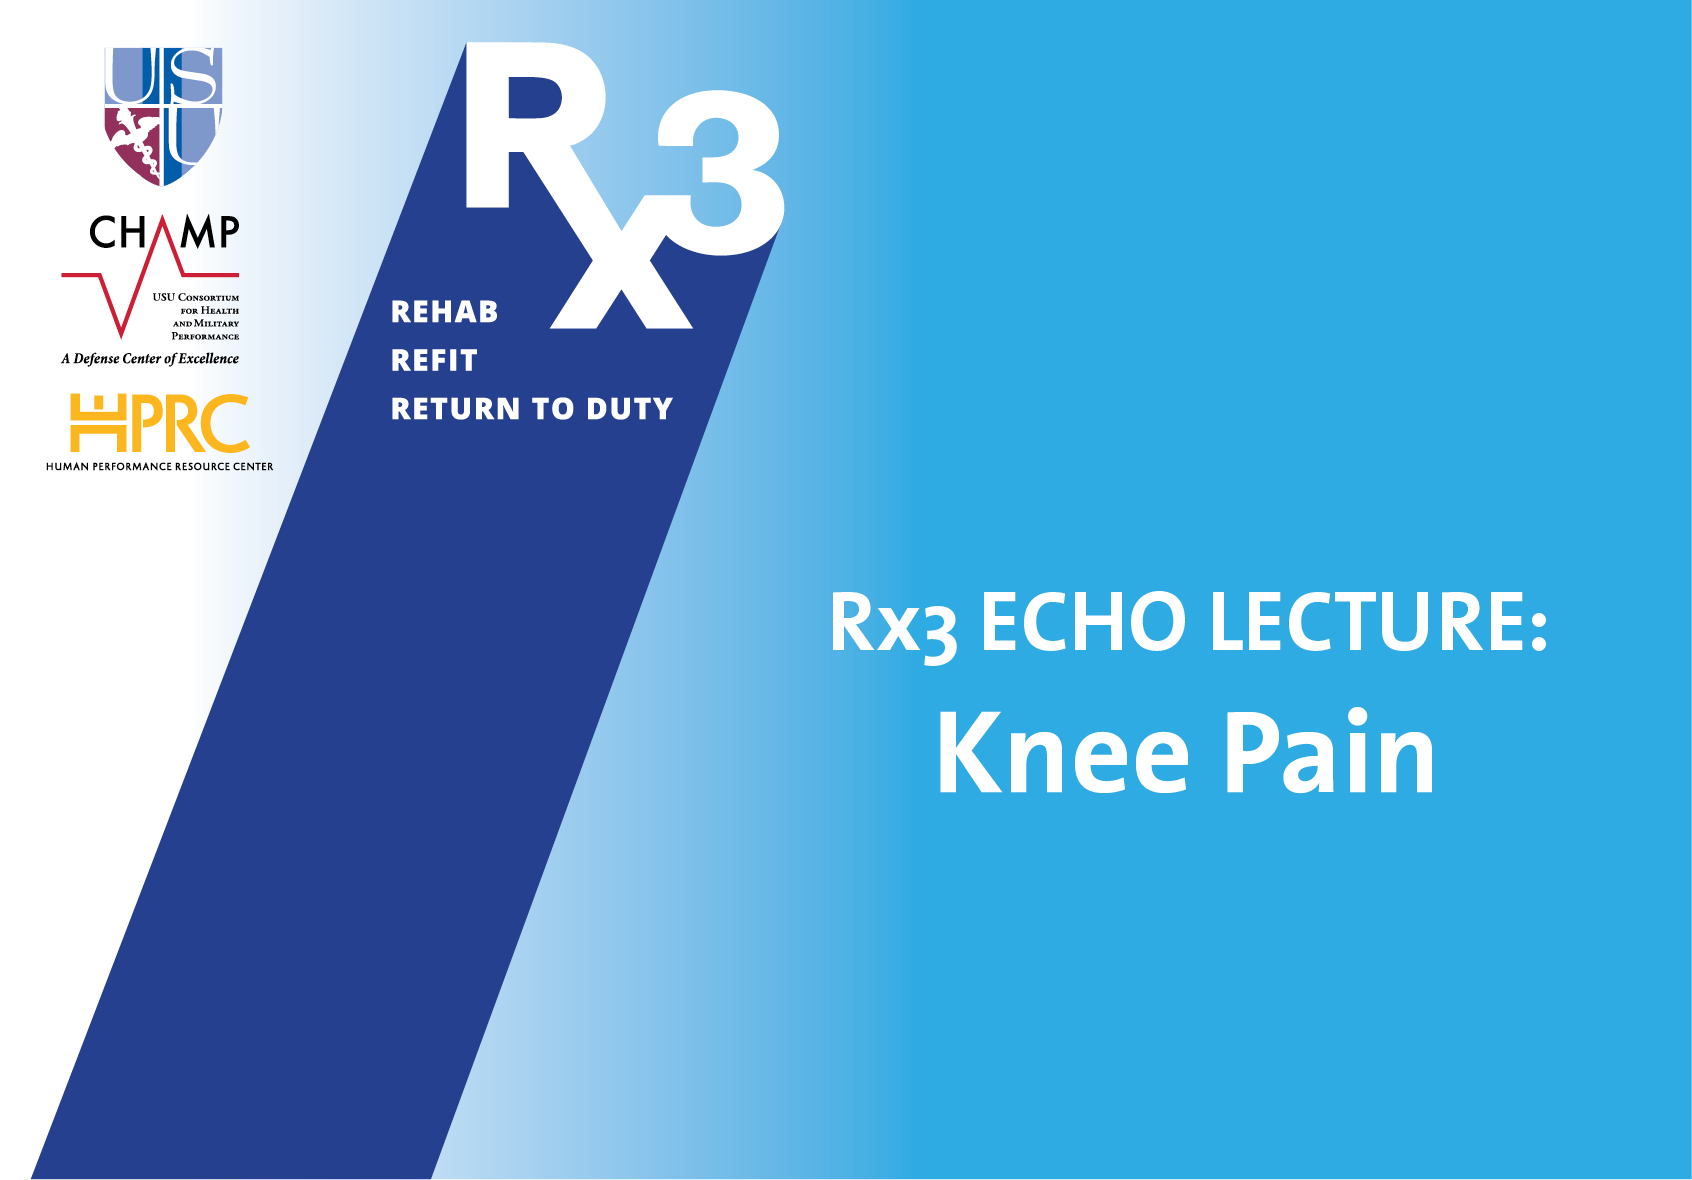 USU CHAMP HPRC Rx3 ECHO LECTURE  Knee Pain